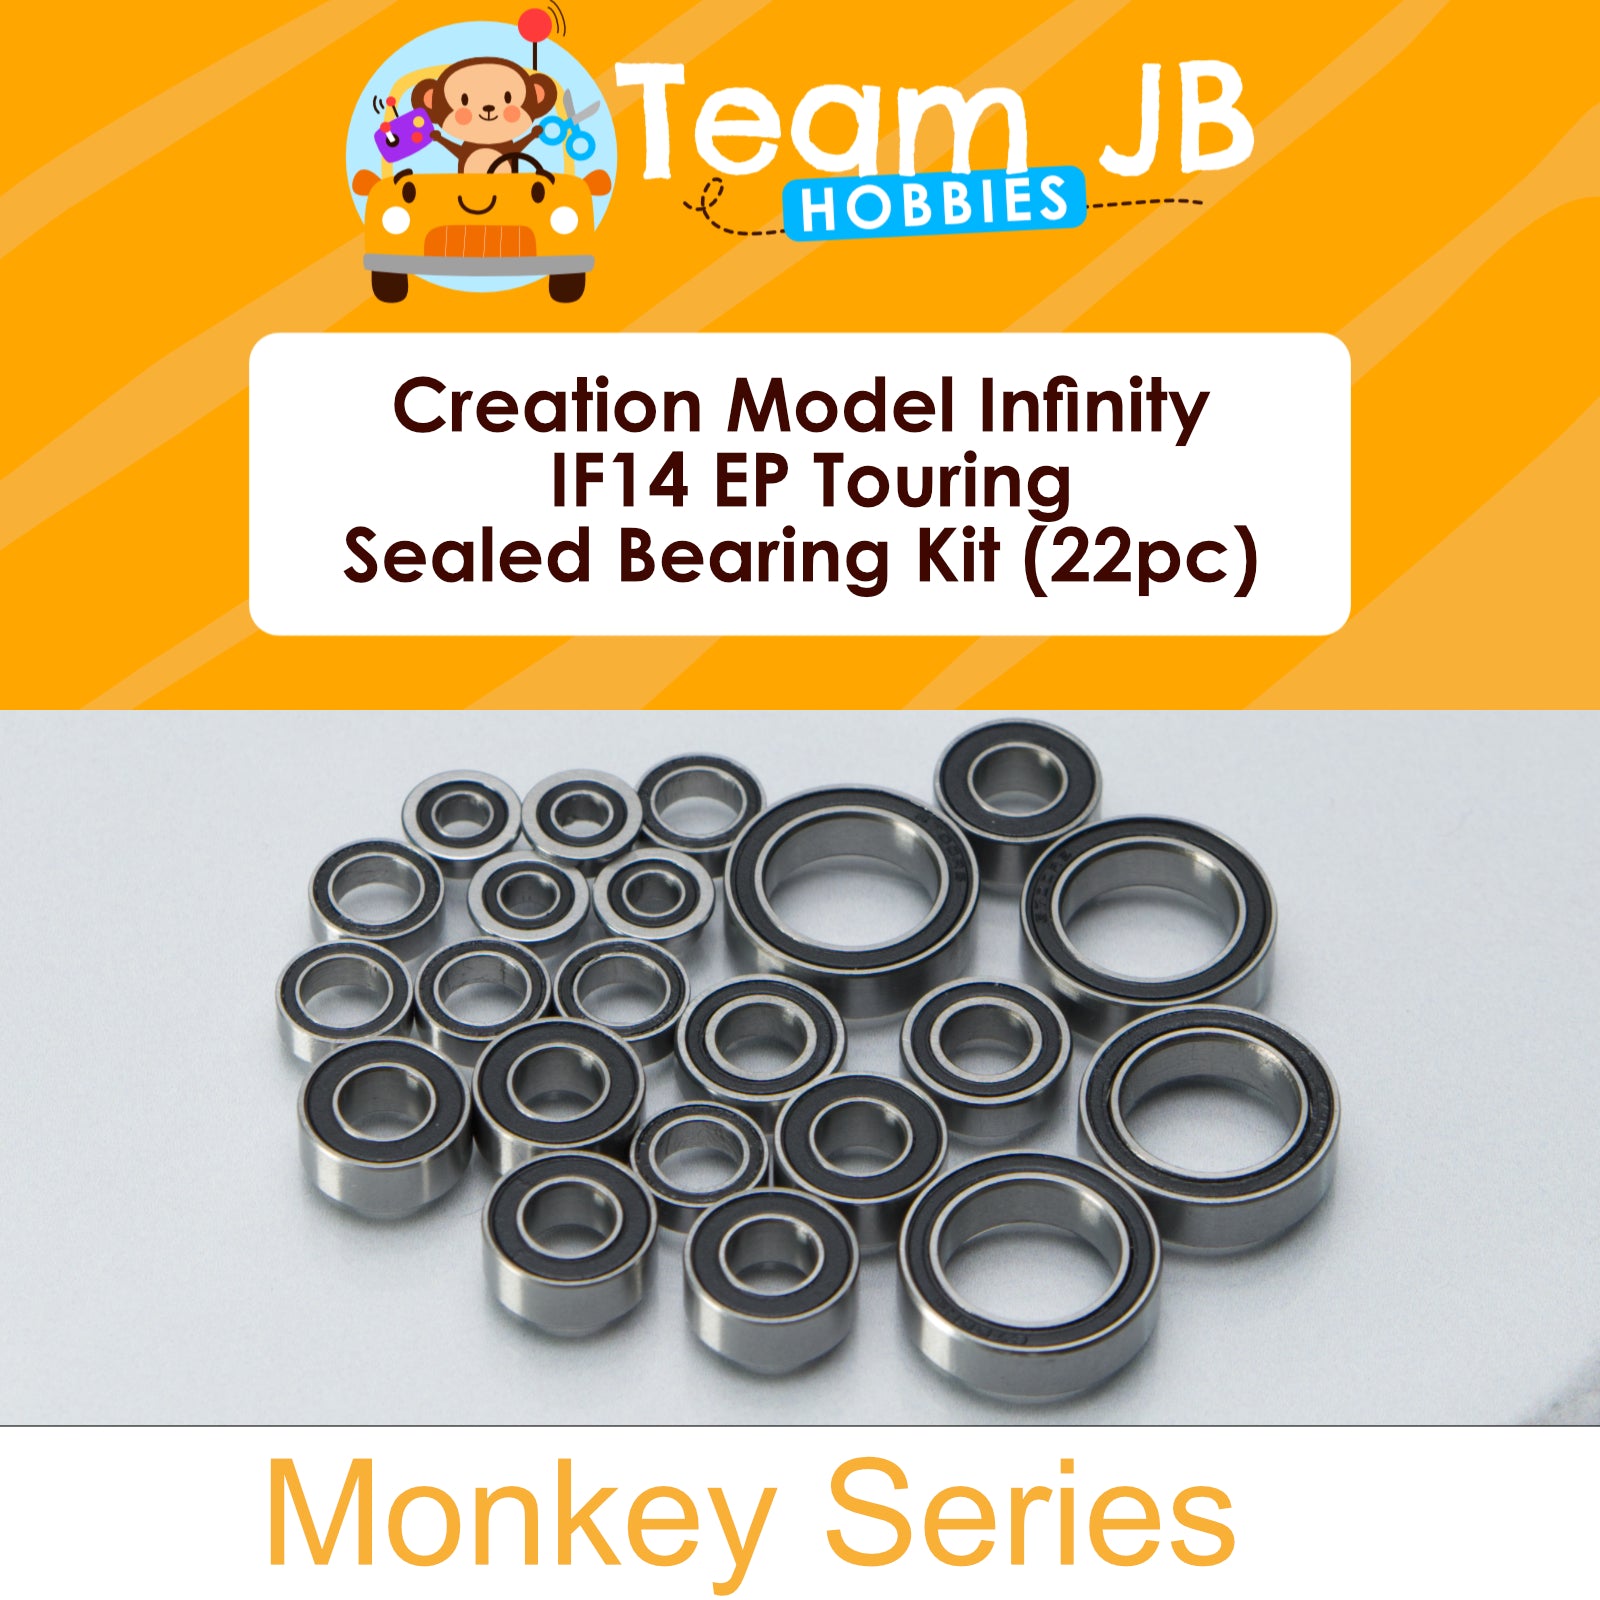 Creation Model Infinity IF14 EP Touring - Sealed Bearing Kit